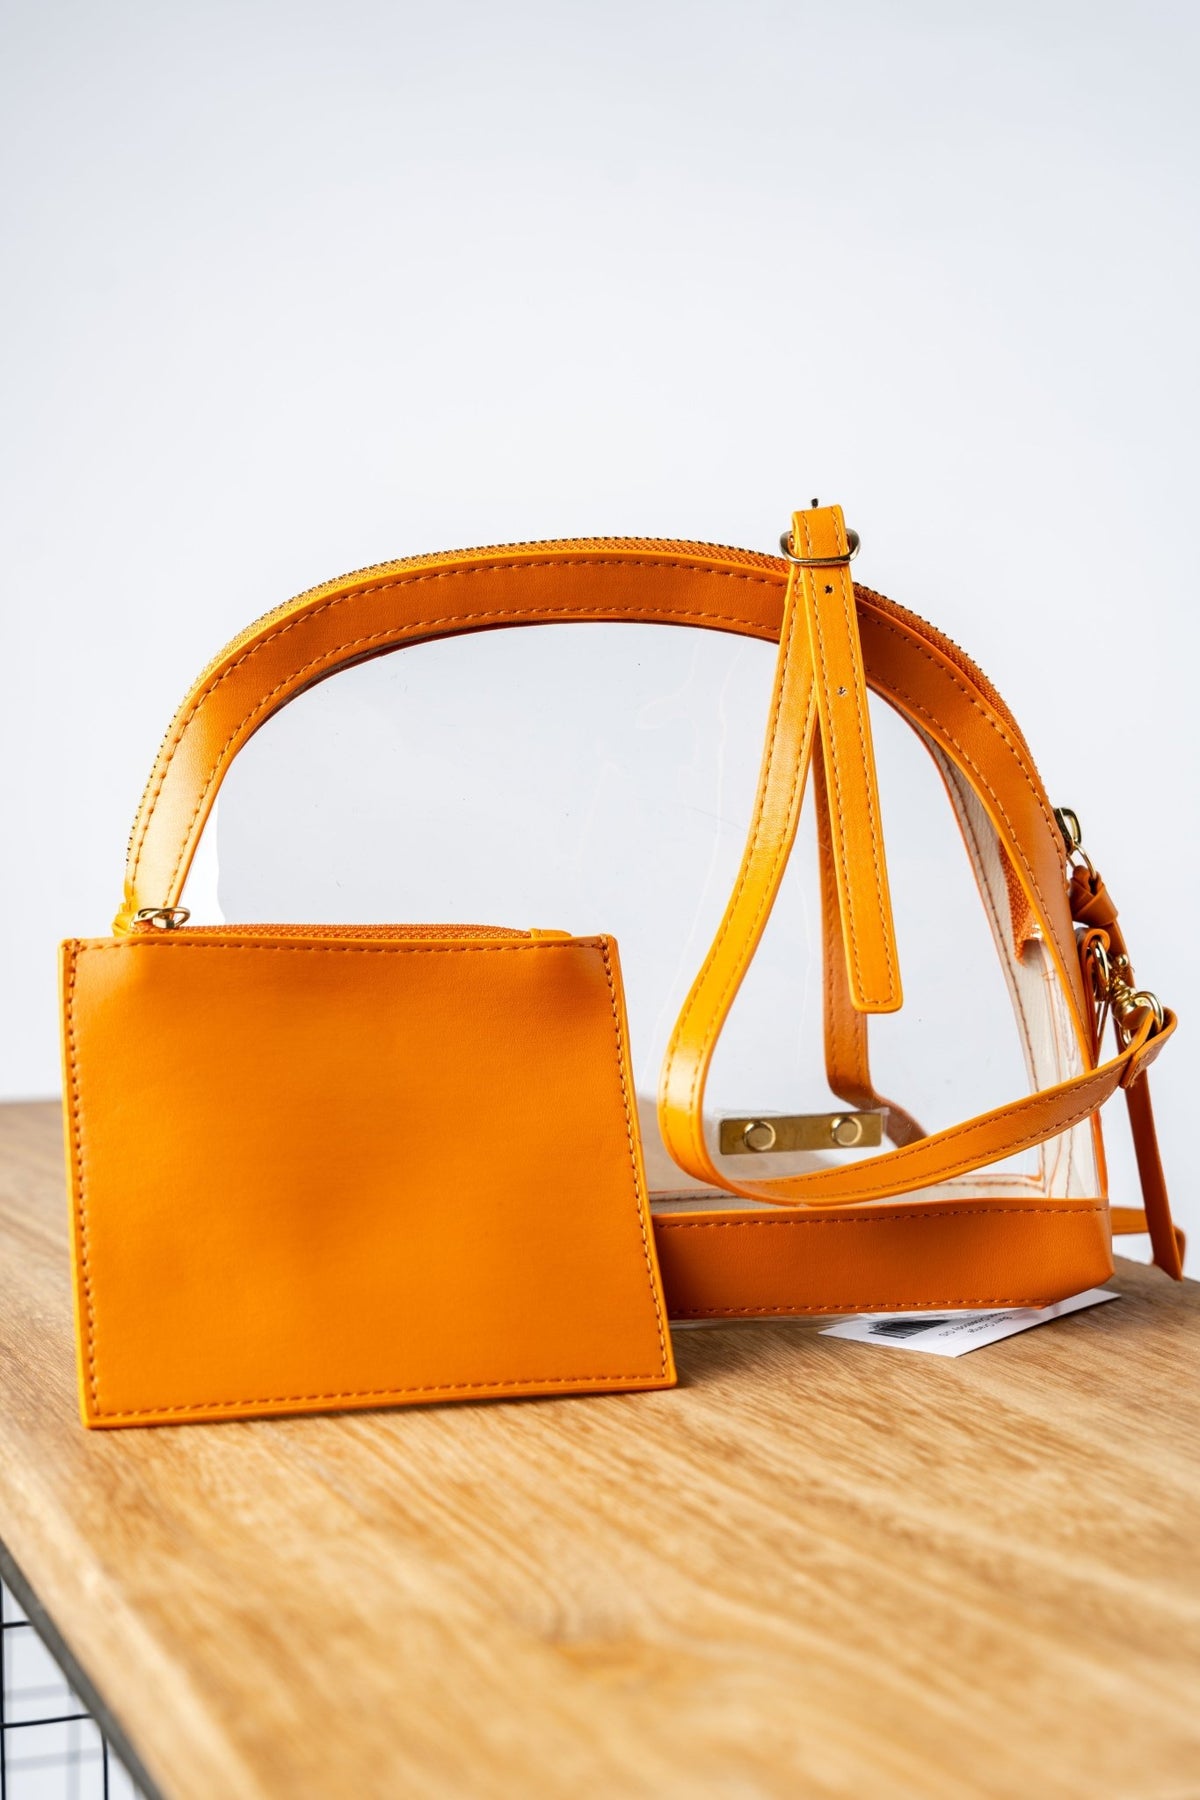 Clear half moon crossbody stadium purse orange - Trendy Bags at Lush Fashion Lounge Boutique in Oklahoma City